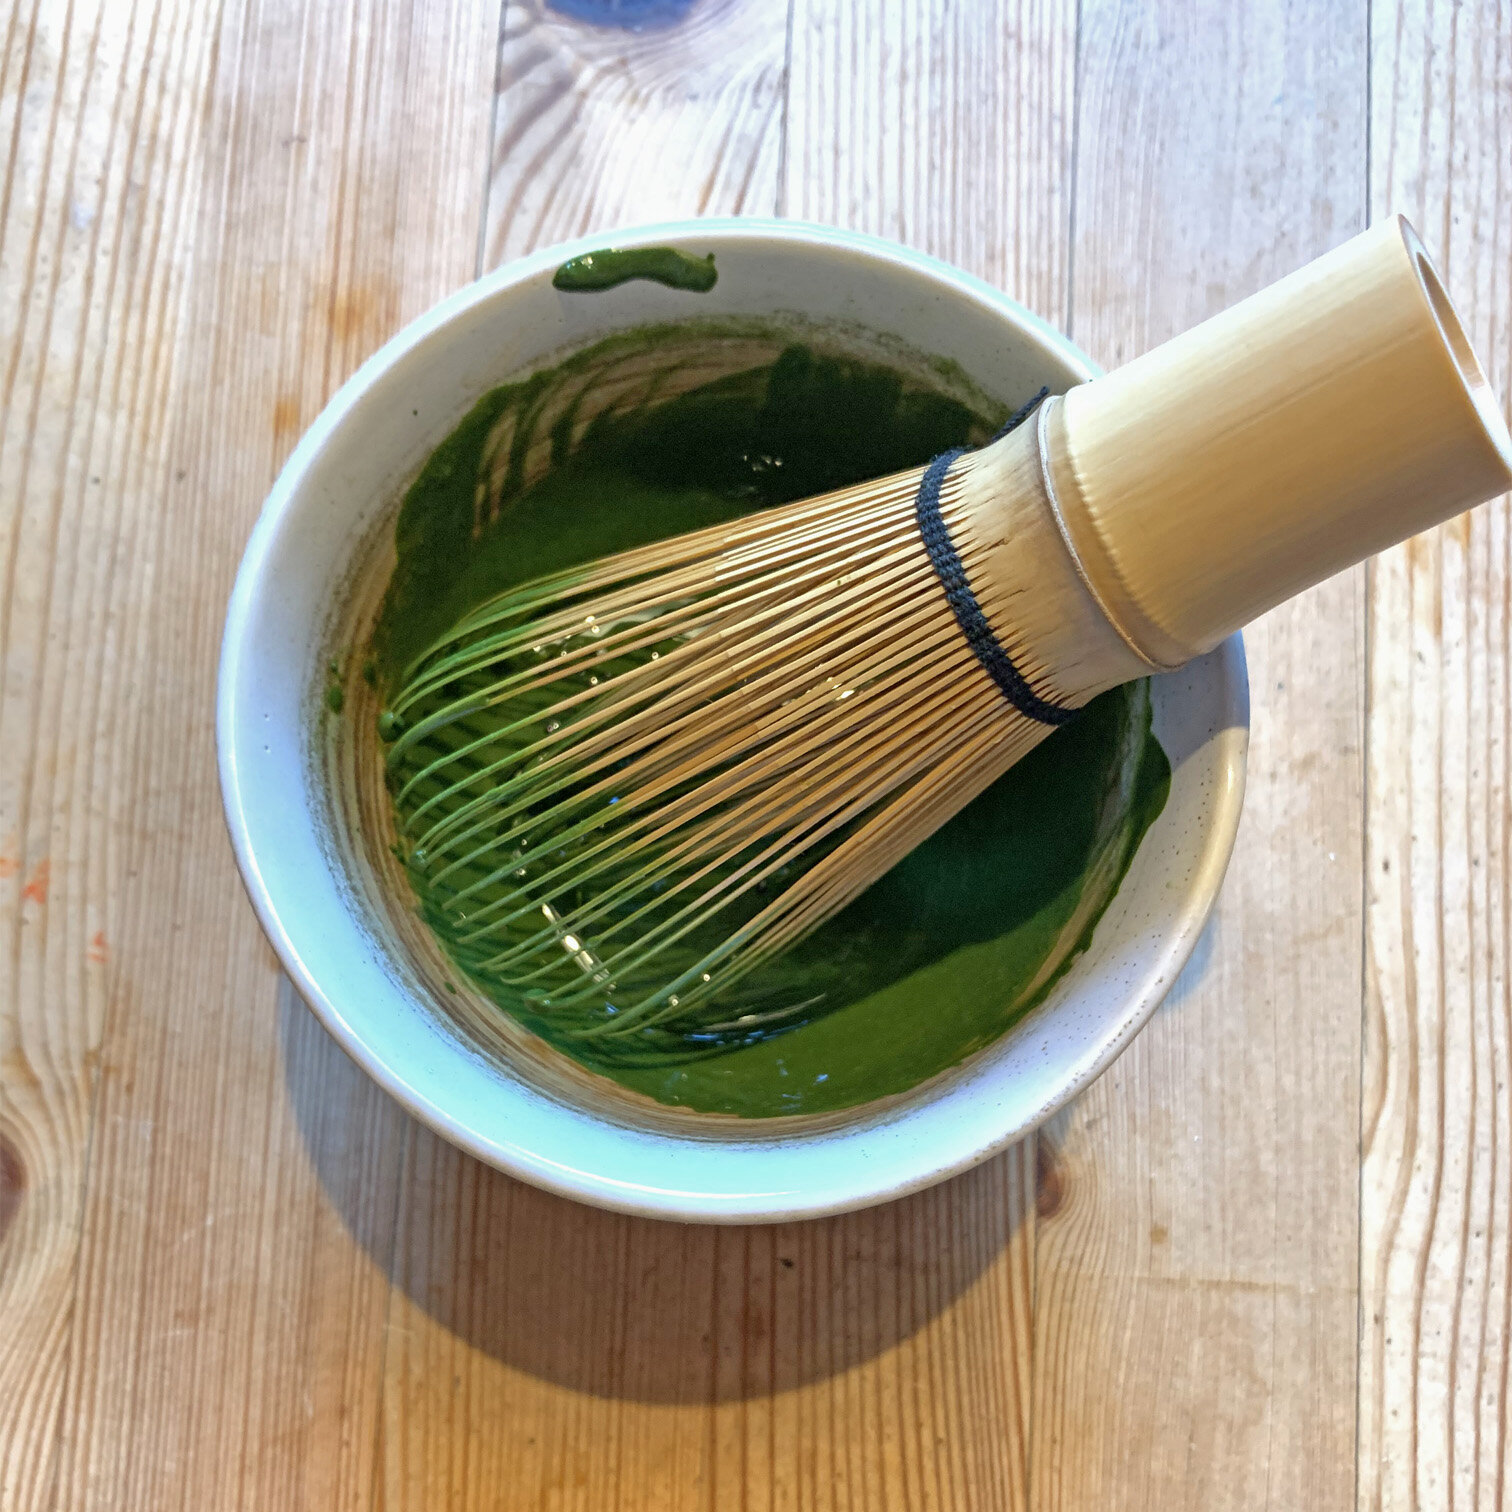 Koicha (濃茶) Matcha - Koicha means thick/concentrated tea.